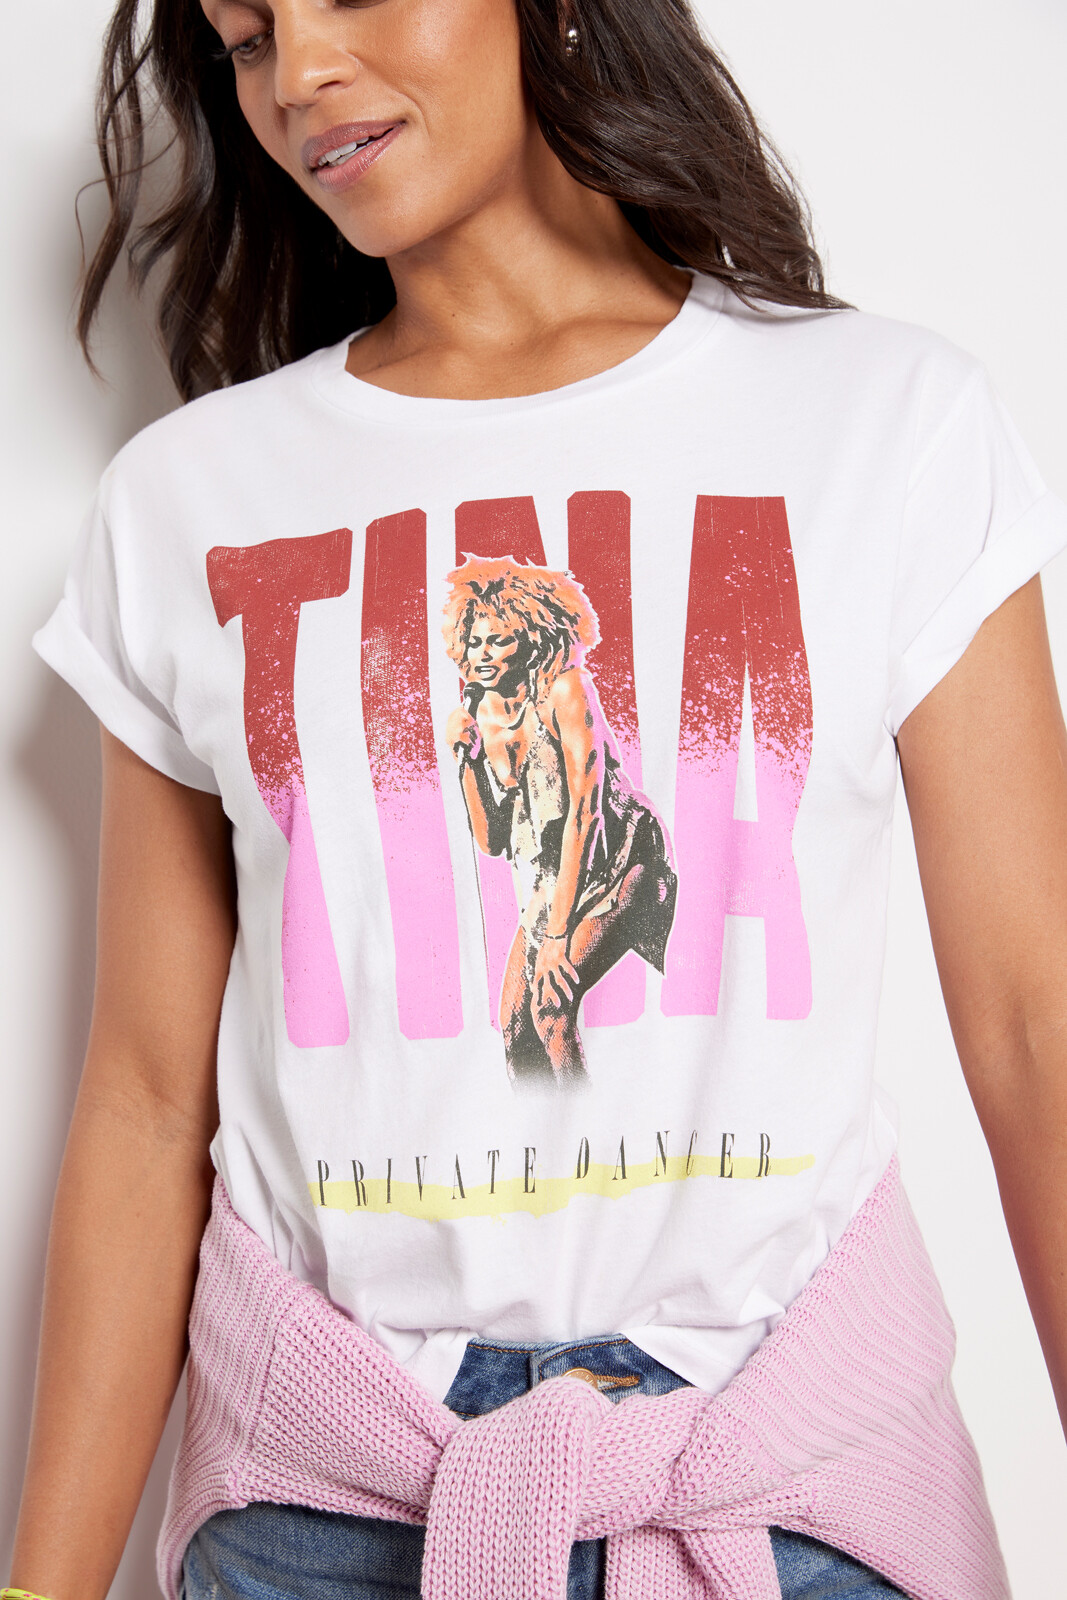 Tina Turner Tee